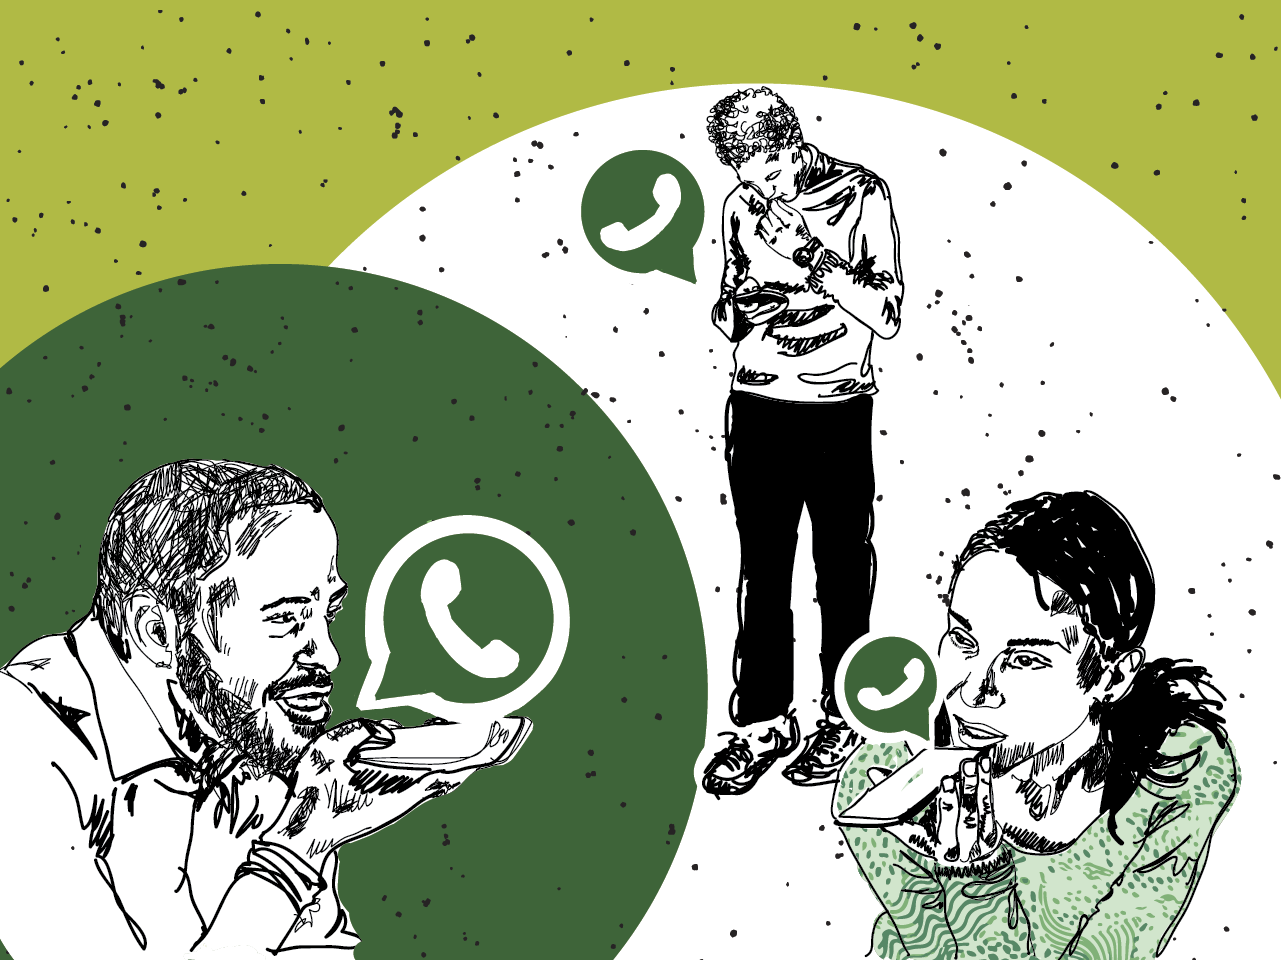 WhatsApp finalmente deixa esconder o status “online”